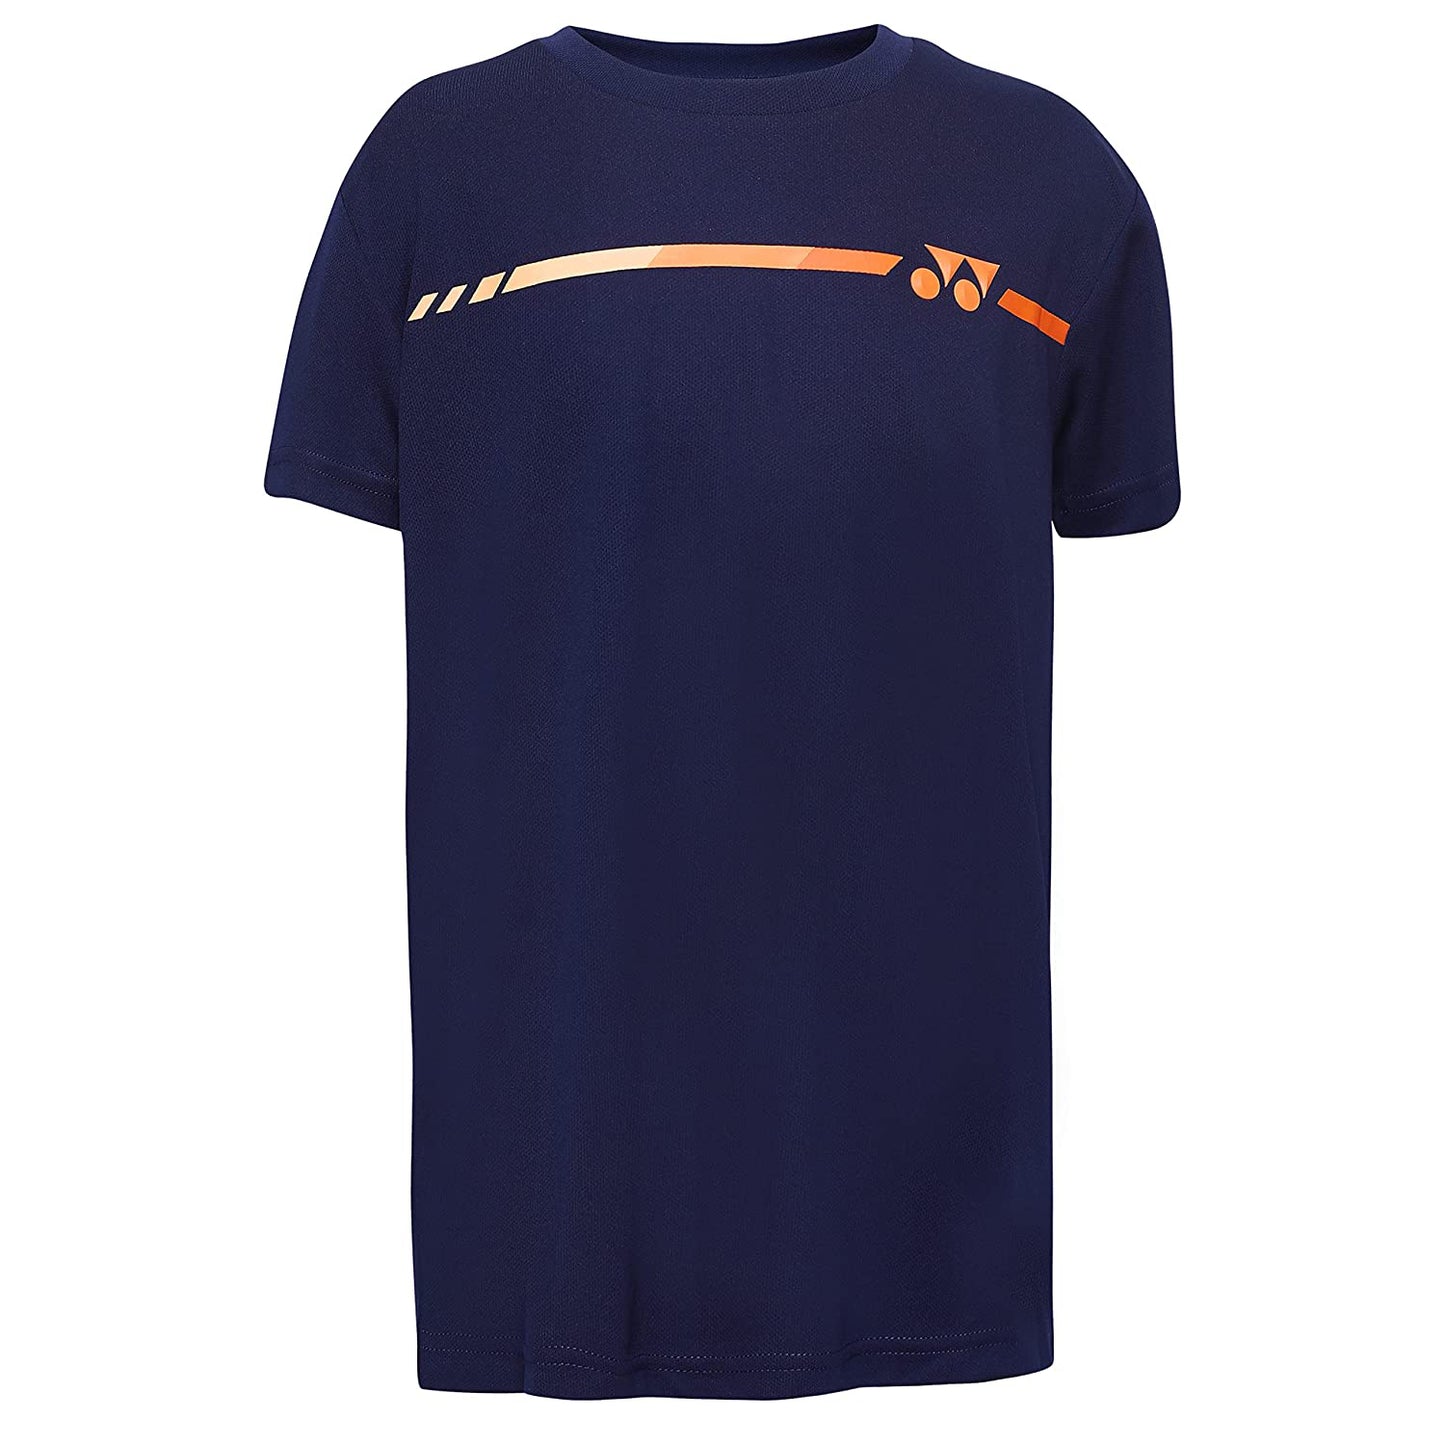 Yonex 2315 Easy22 Mens Round Neck T-Shirt - Best Price online Prokicksports.com